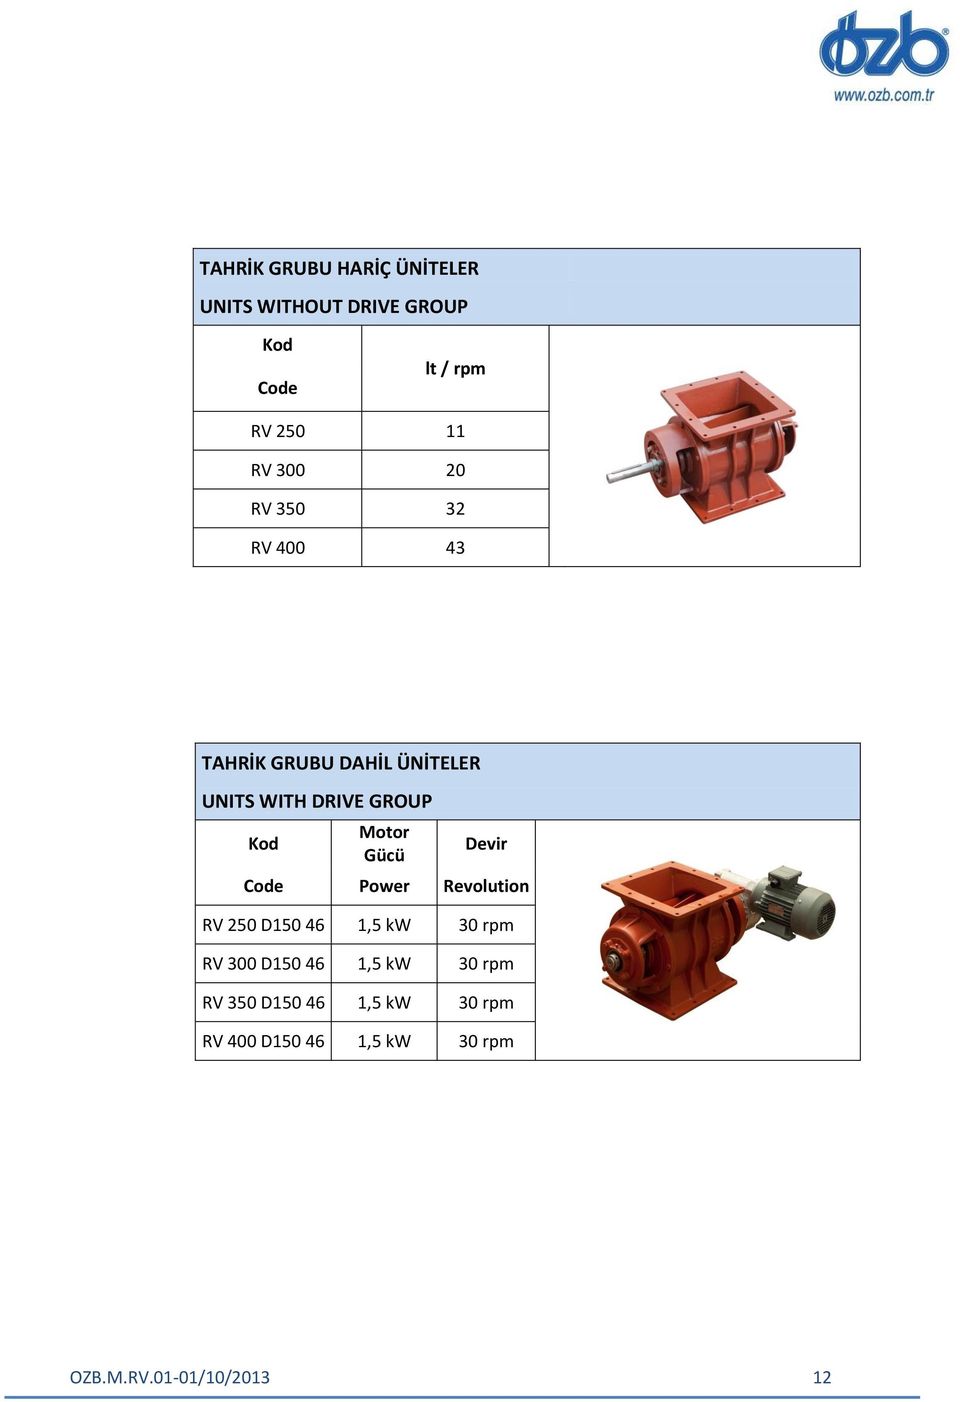 Motor Gücü Devir Code Power Revolution RV 250 D150 46 1,5 kw 30 rpm RV 300 D150 46 1,5